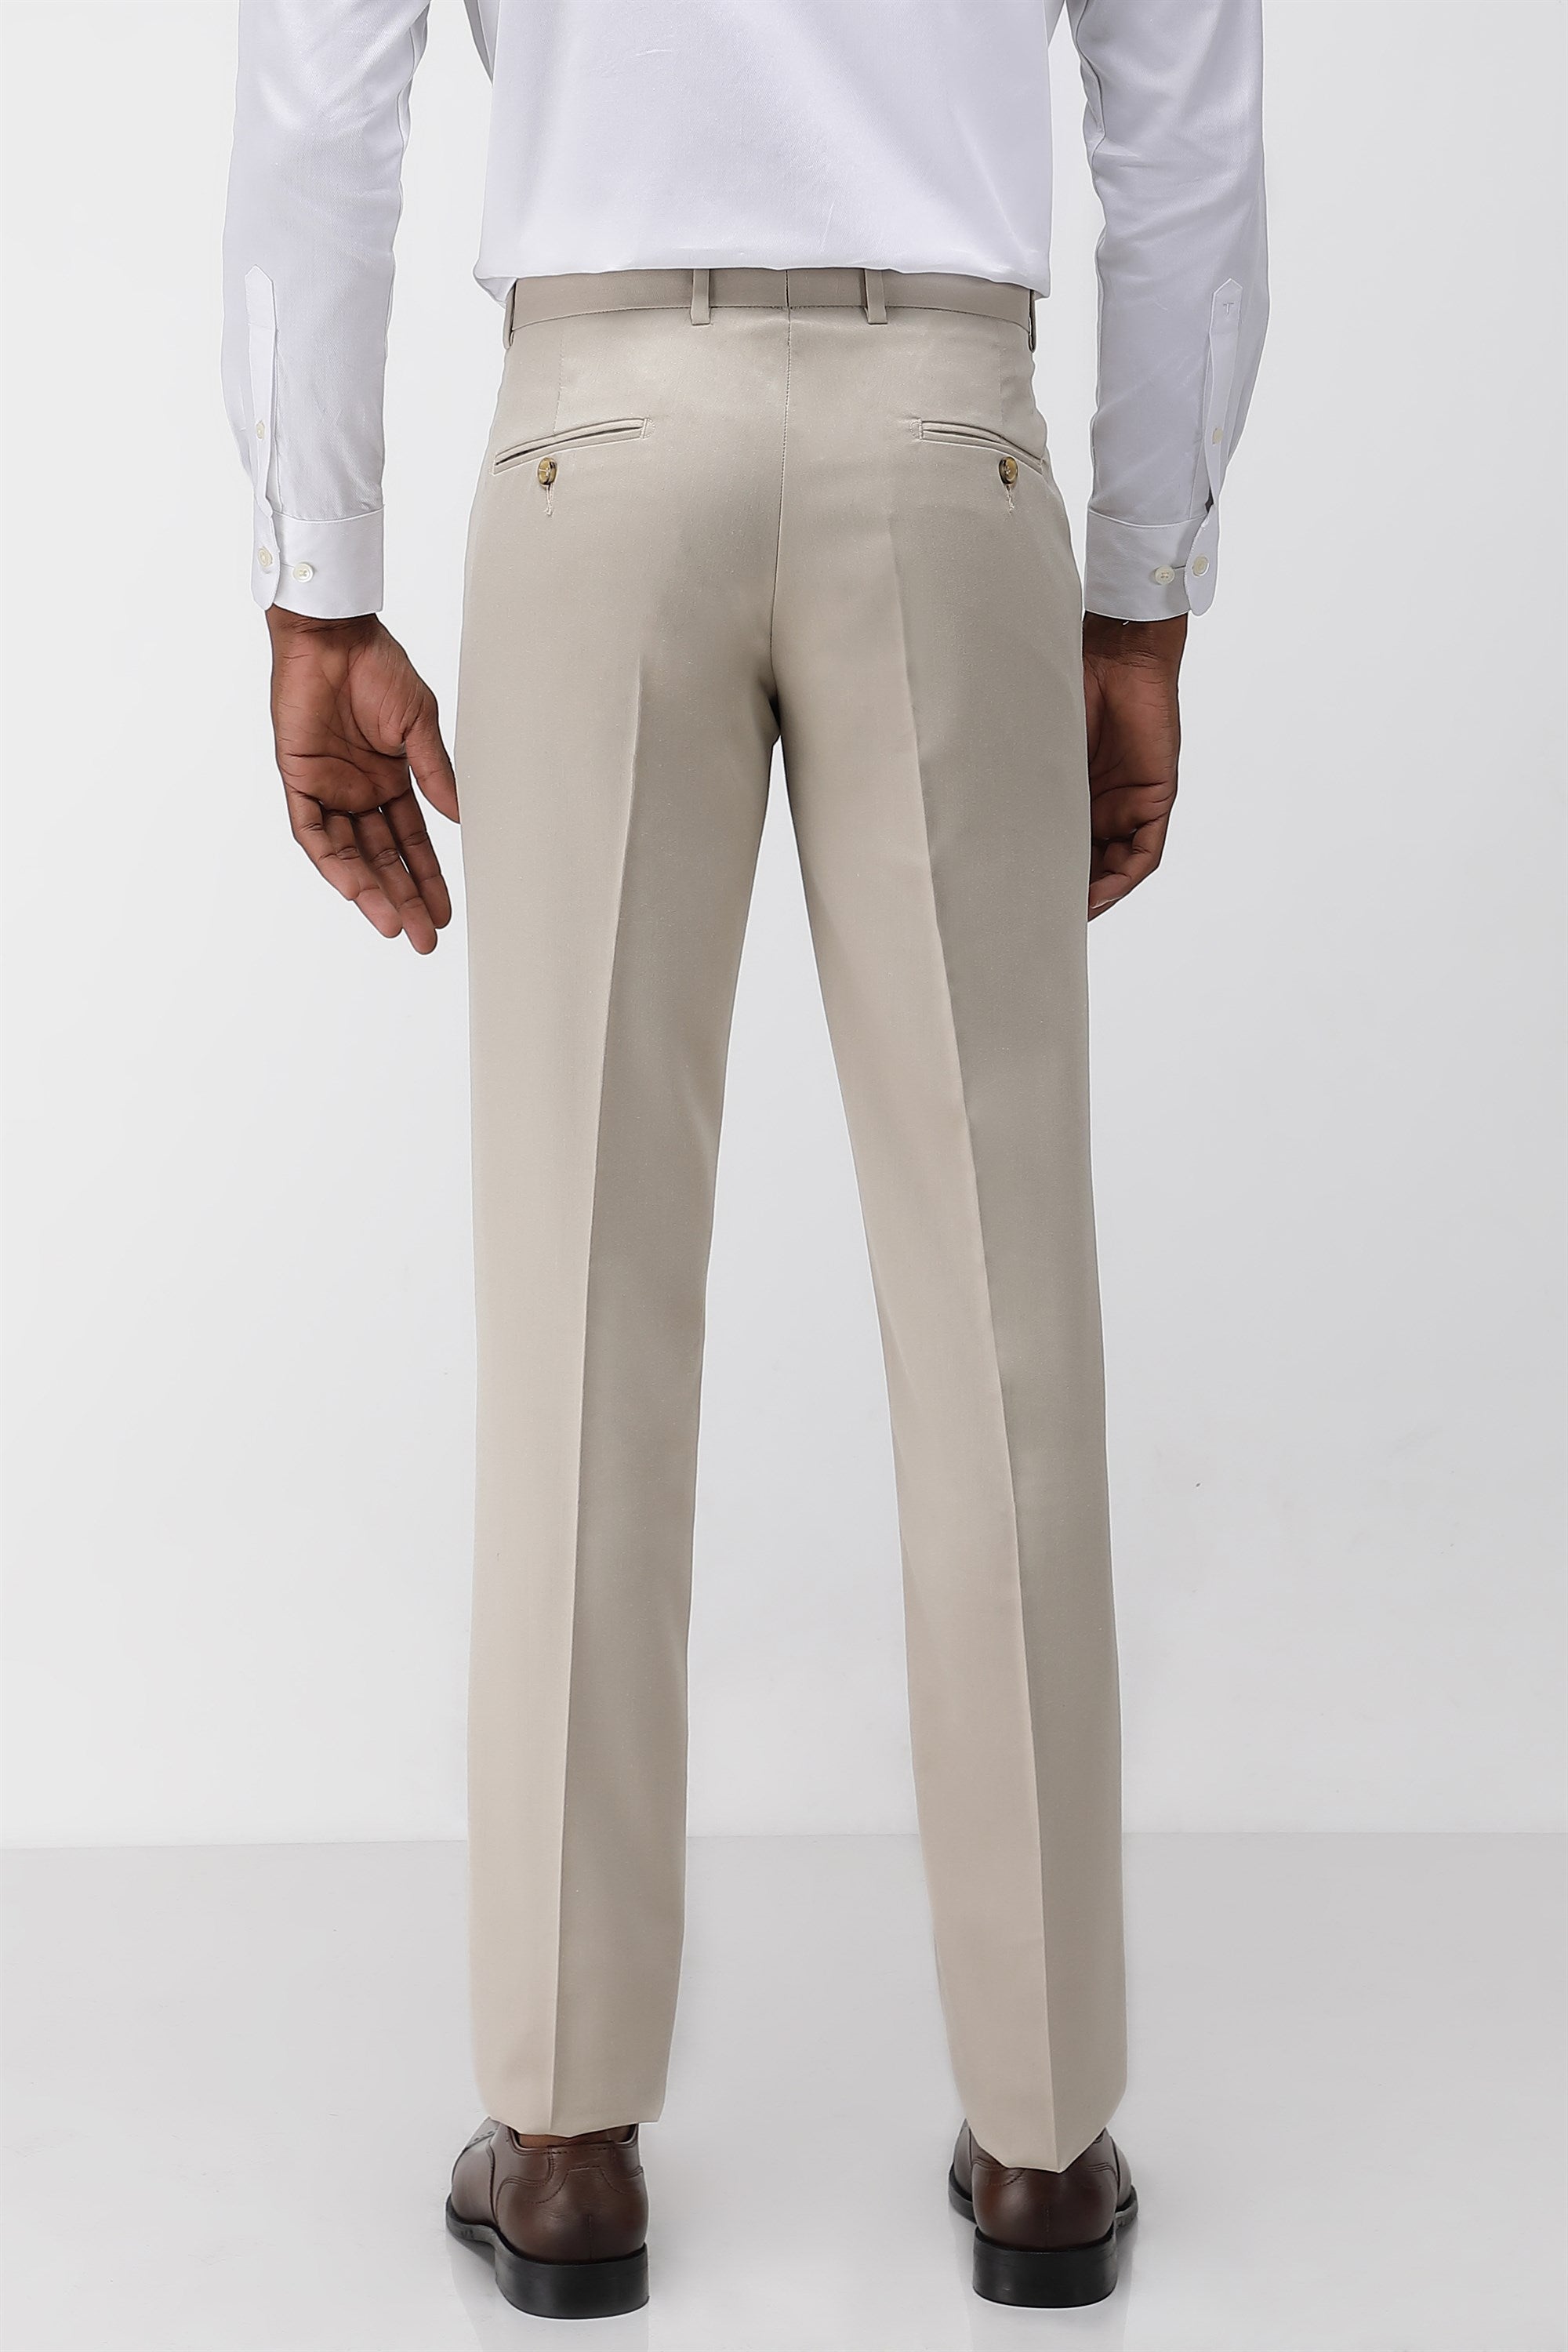 Wholesale Mens formal pants top brand slim fashion stock men khaki dress  pants From malibabacom